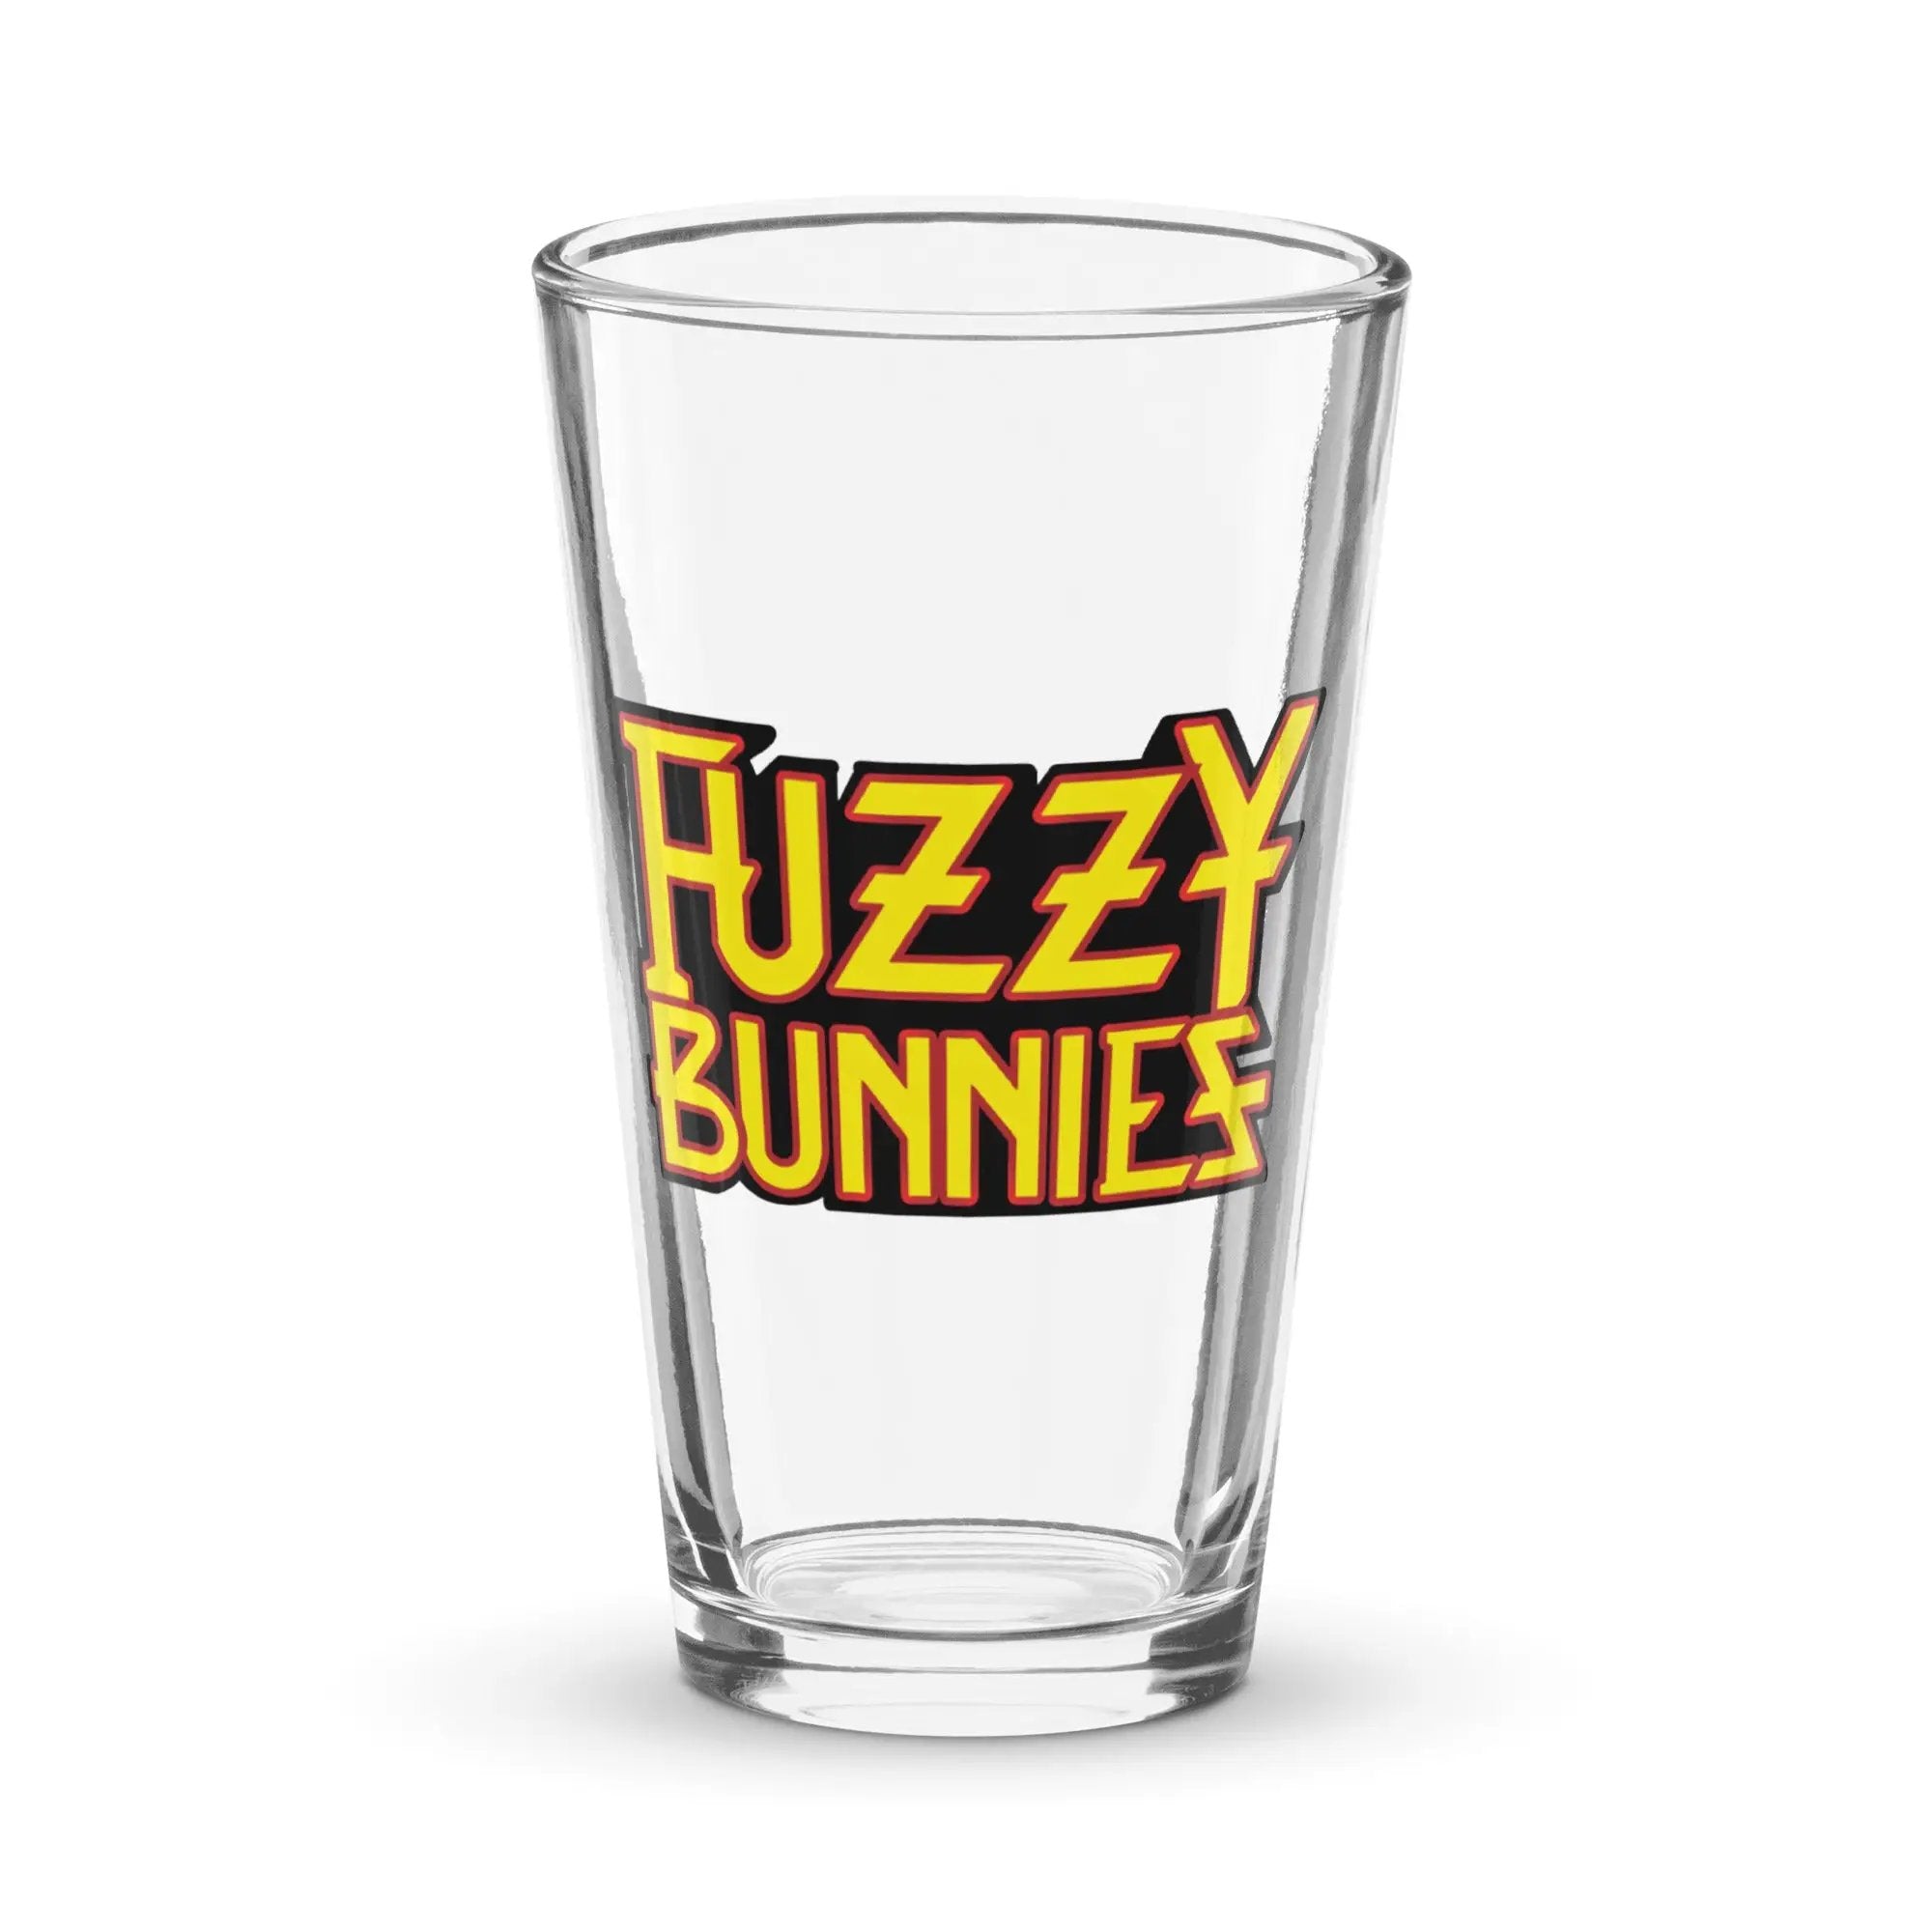 Fuzzy Bunnies Shaker pint glass